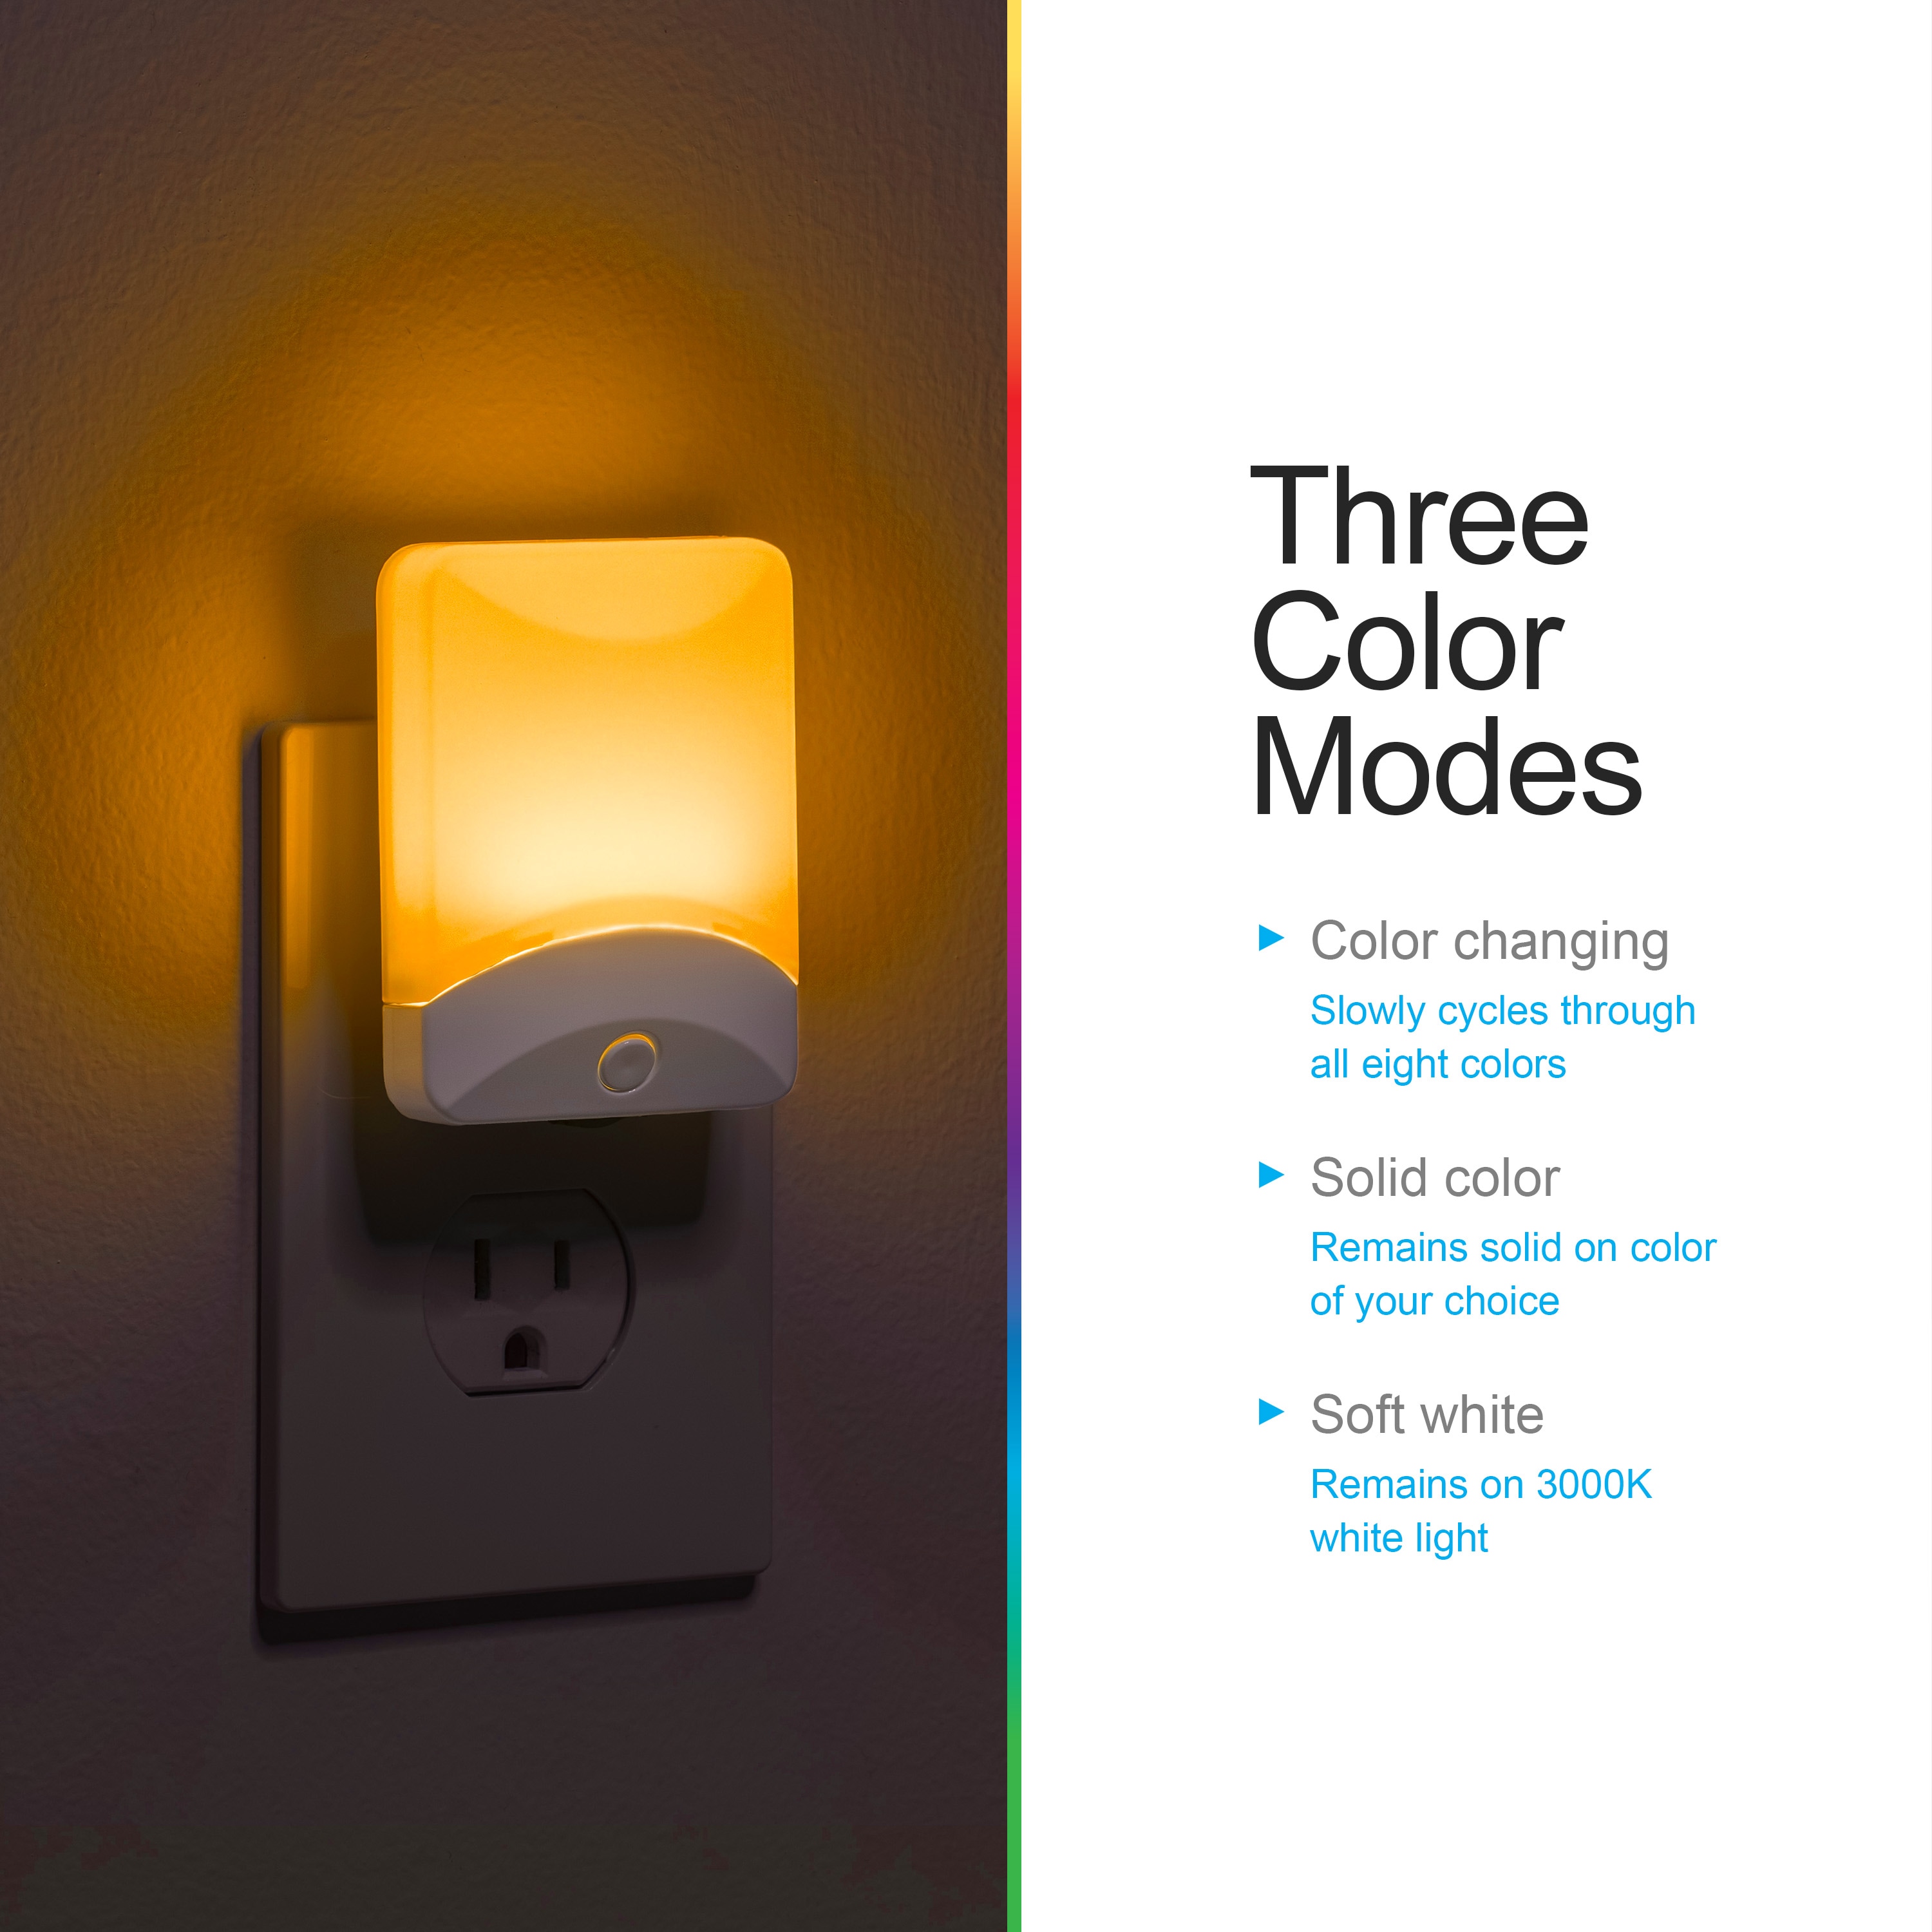 Toilet Night Light, Motion Sensor Activated LED Lamp, Fun 8 Colors